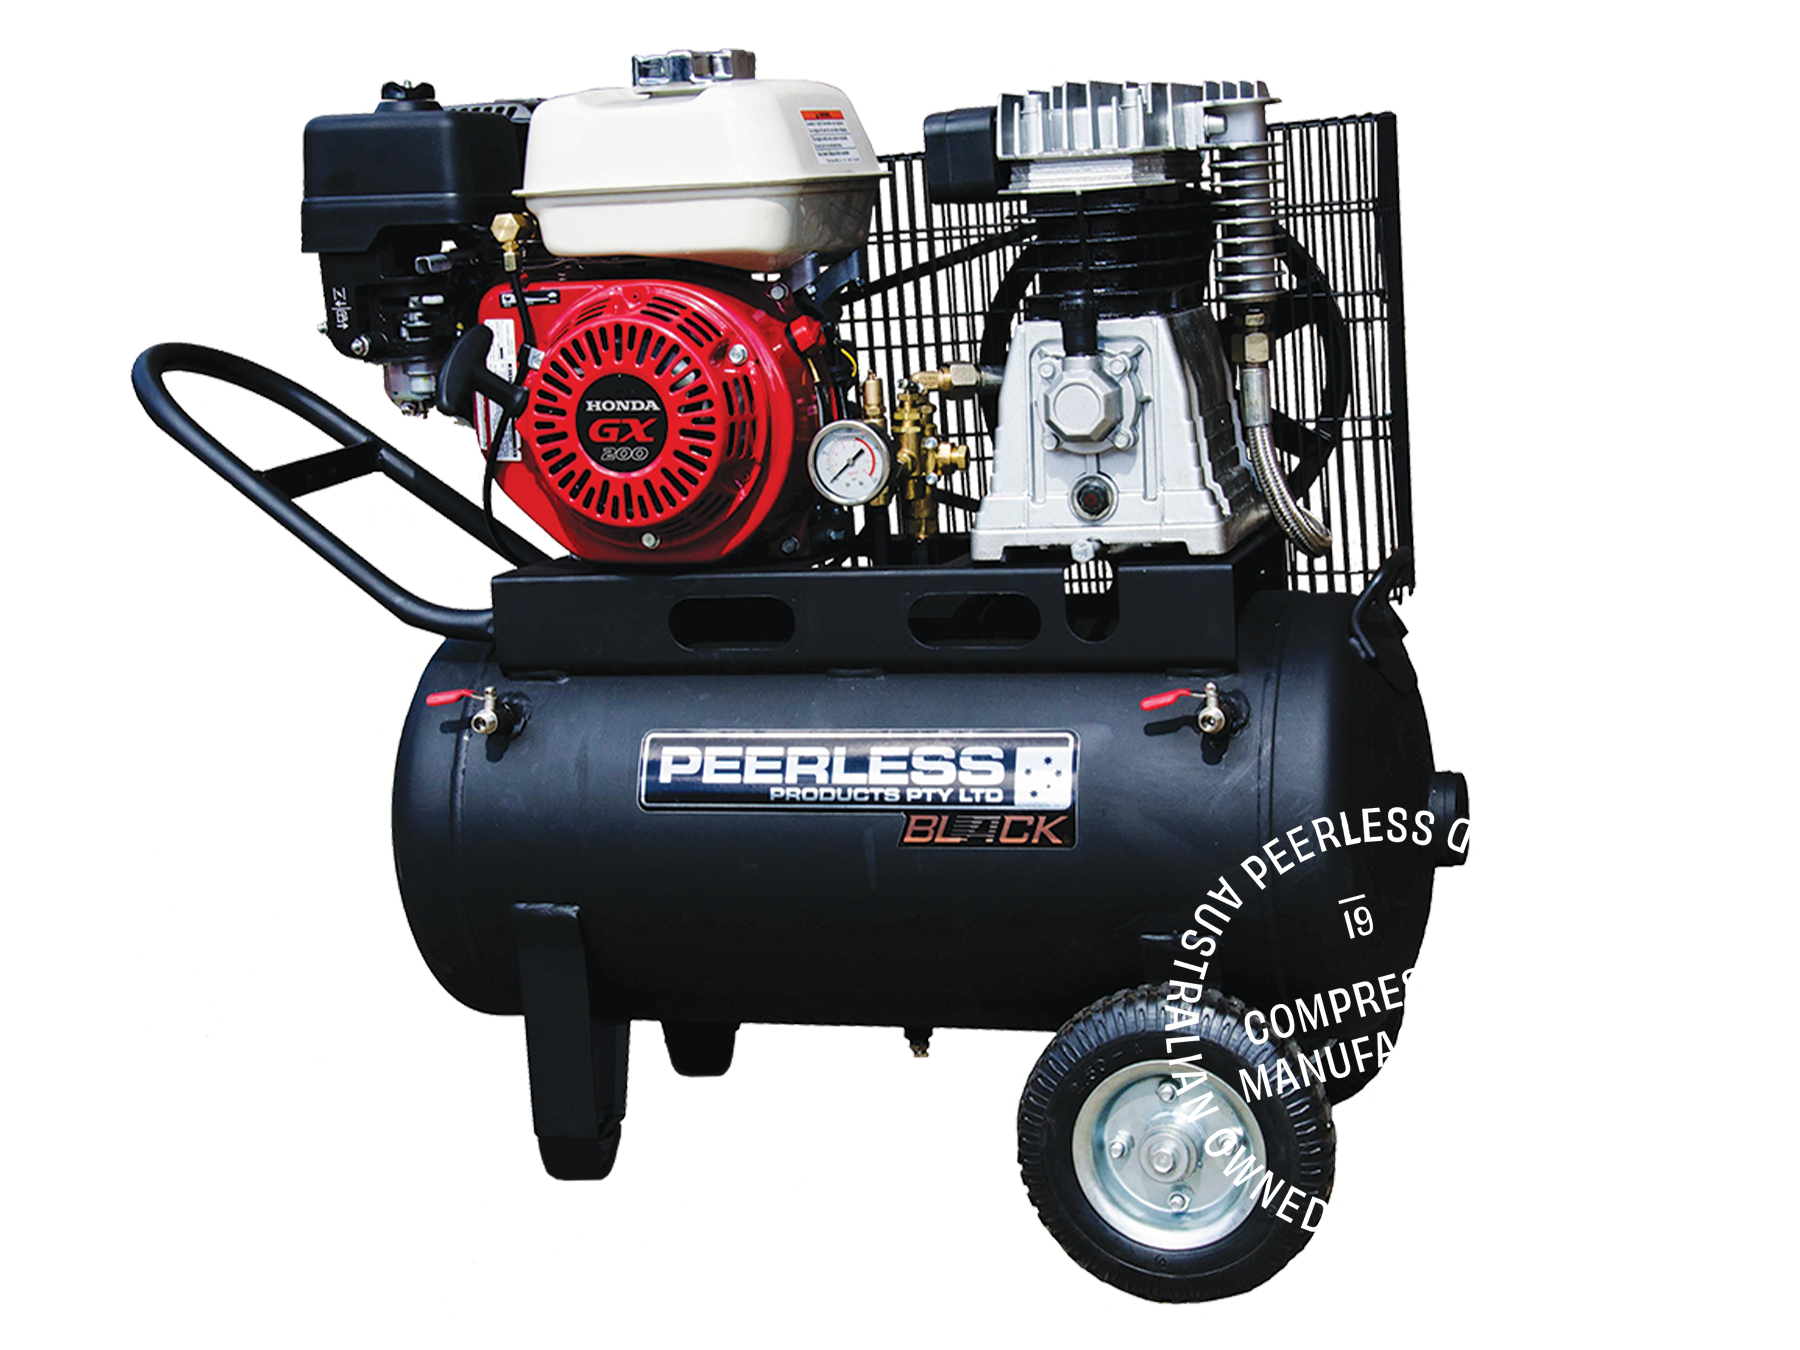 PB17000 Petrol Air Compressor: Belt Drive, Honda GX200, 320LPM